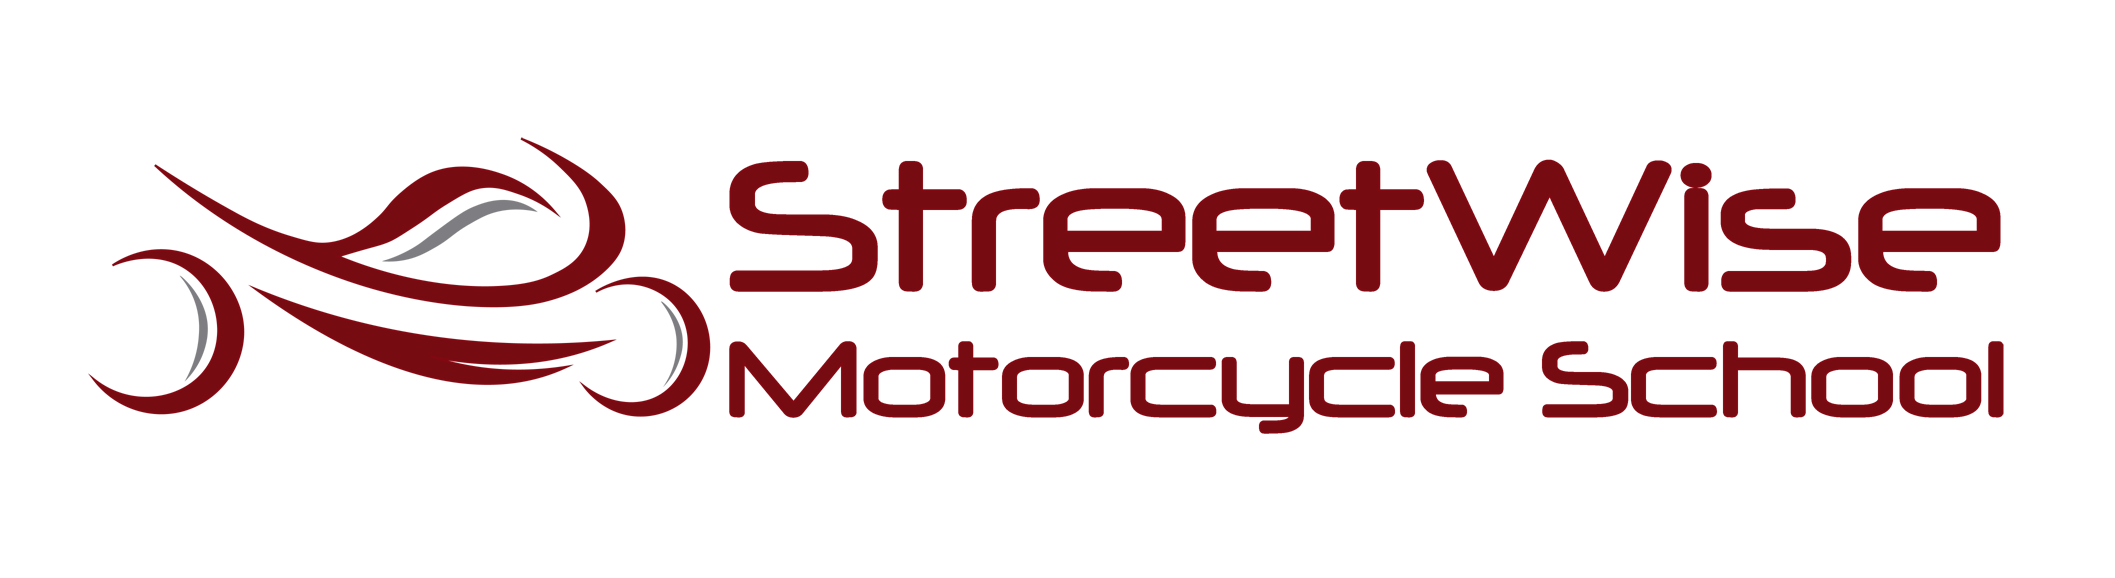 streetwise-logo-long-half-size